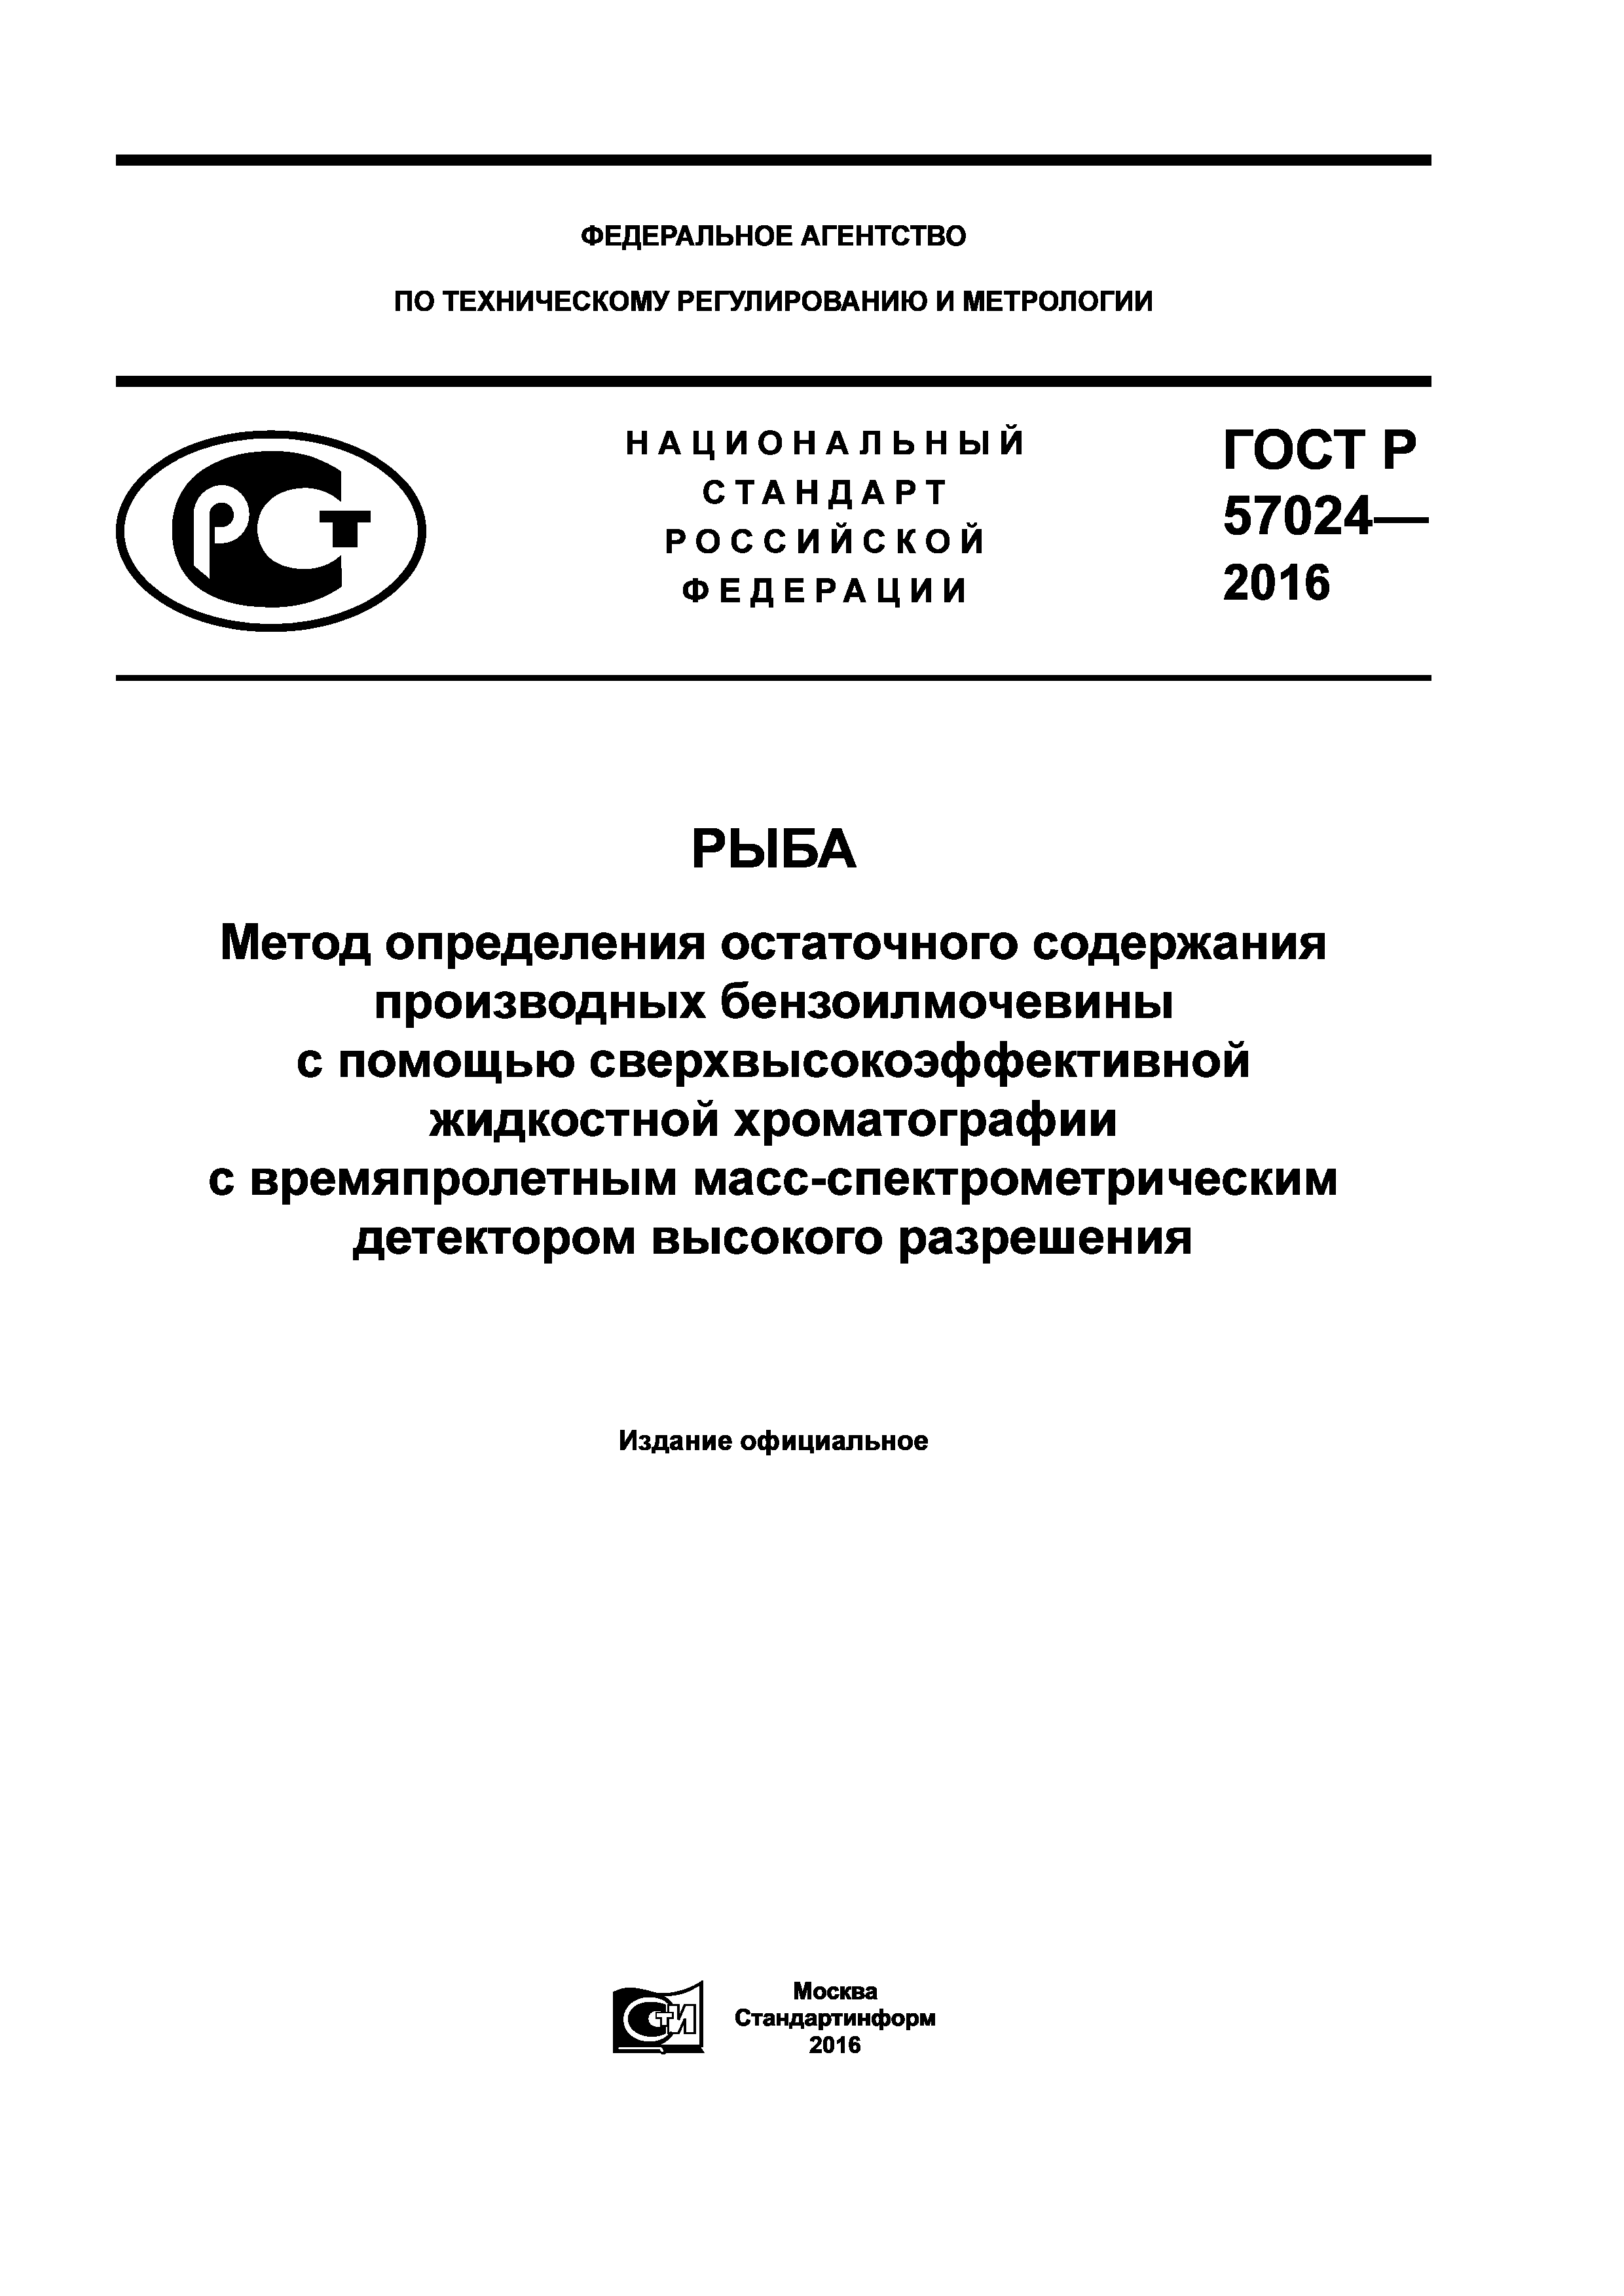 ГОСТ Р 57024-2016